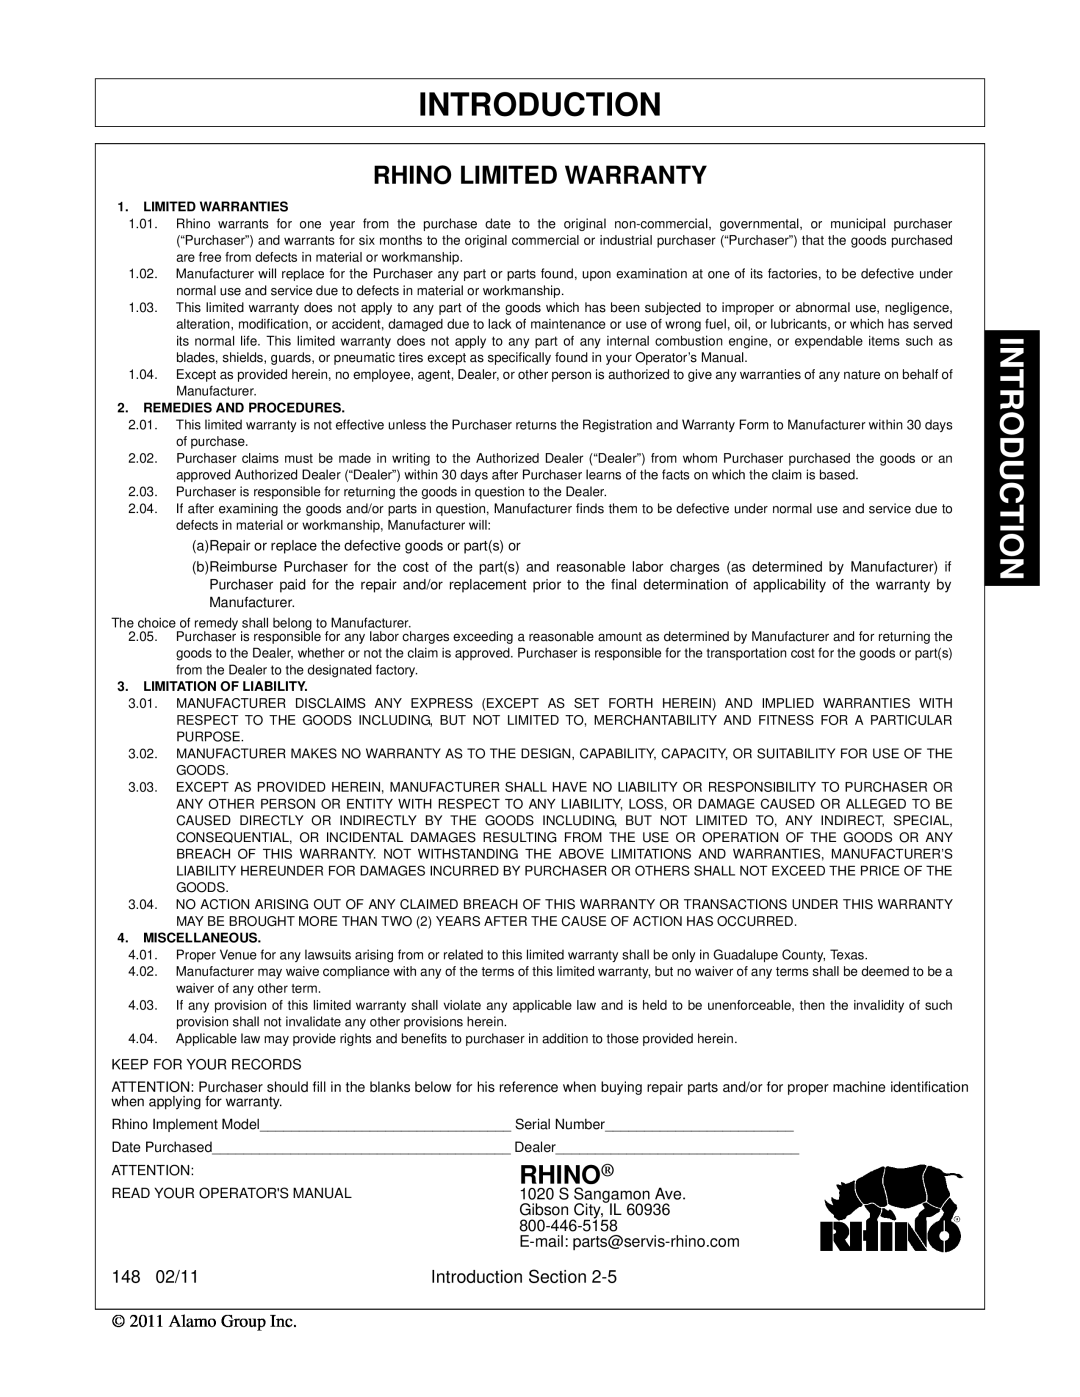 Rhino Mounts 148 manual Rhino Limited Warranty, Introduction, S Sangamon Ave, Gibson City, IL 